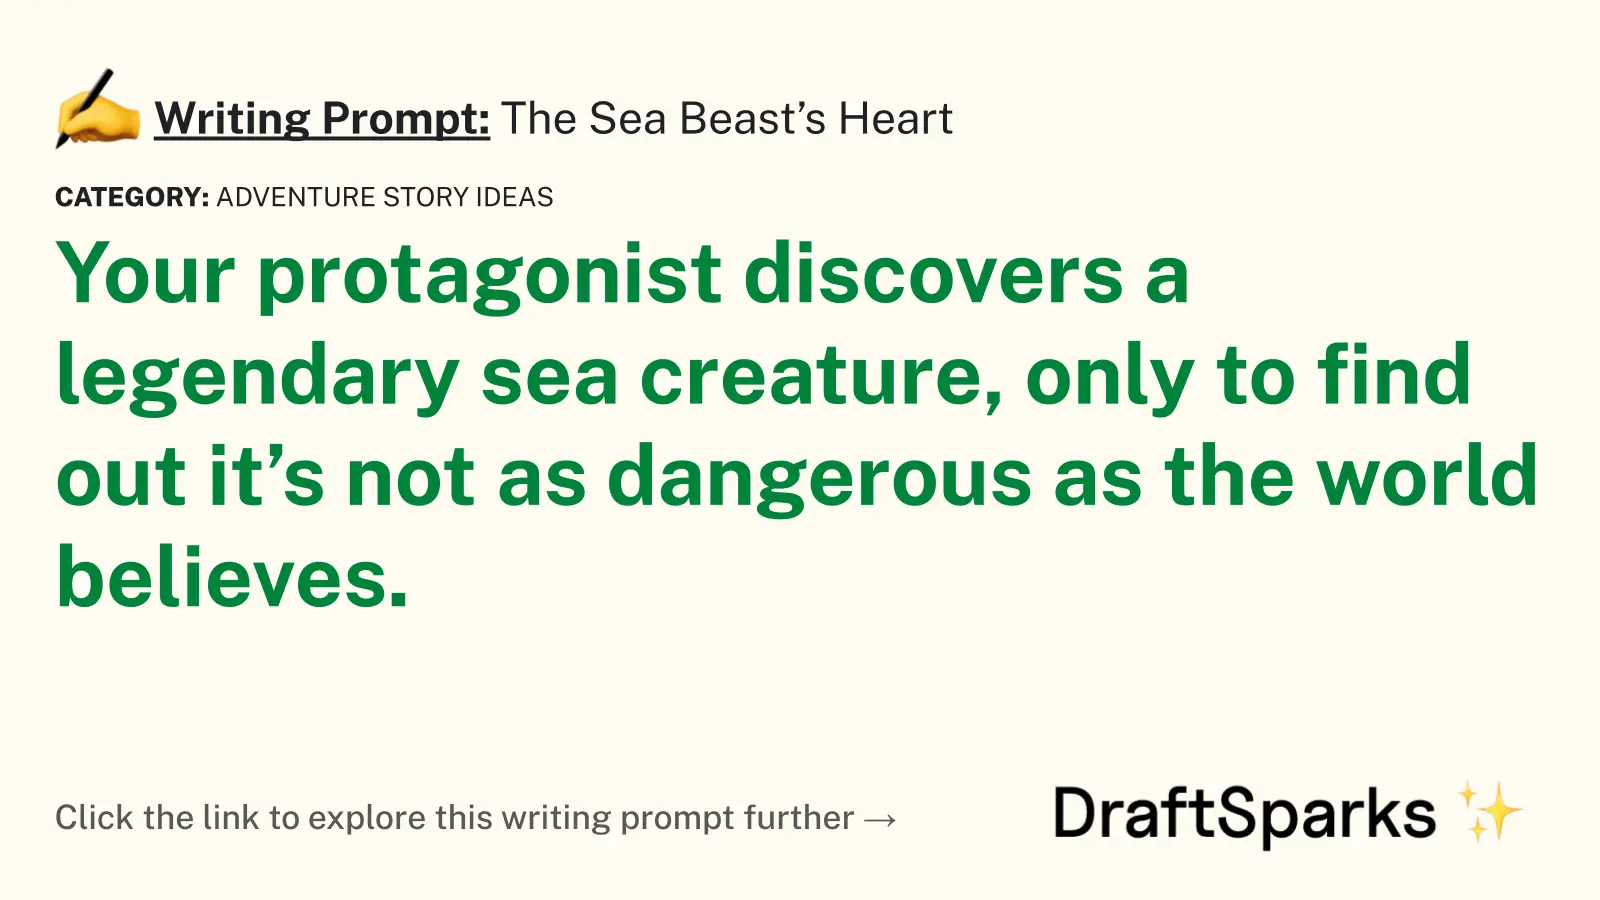 The Sea Beast’s Heart